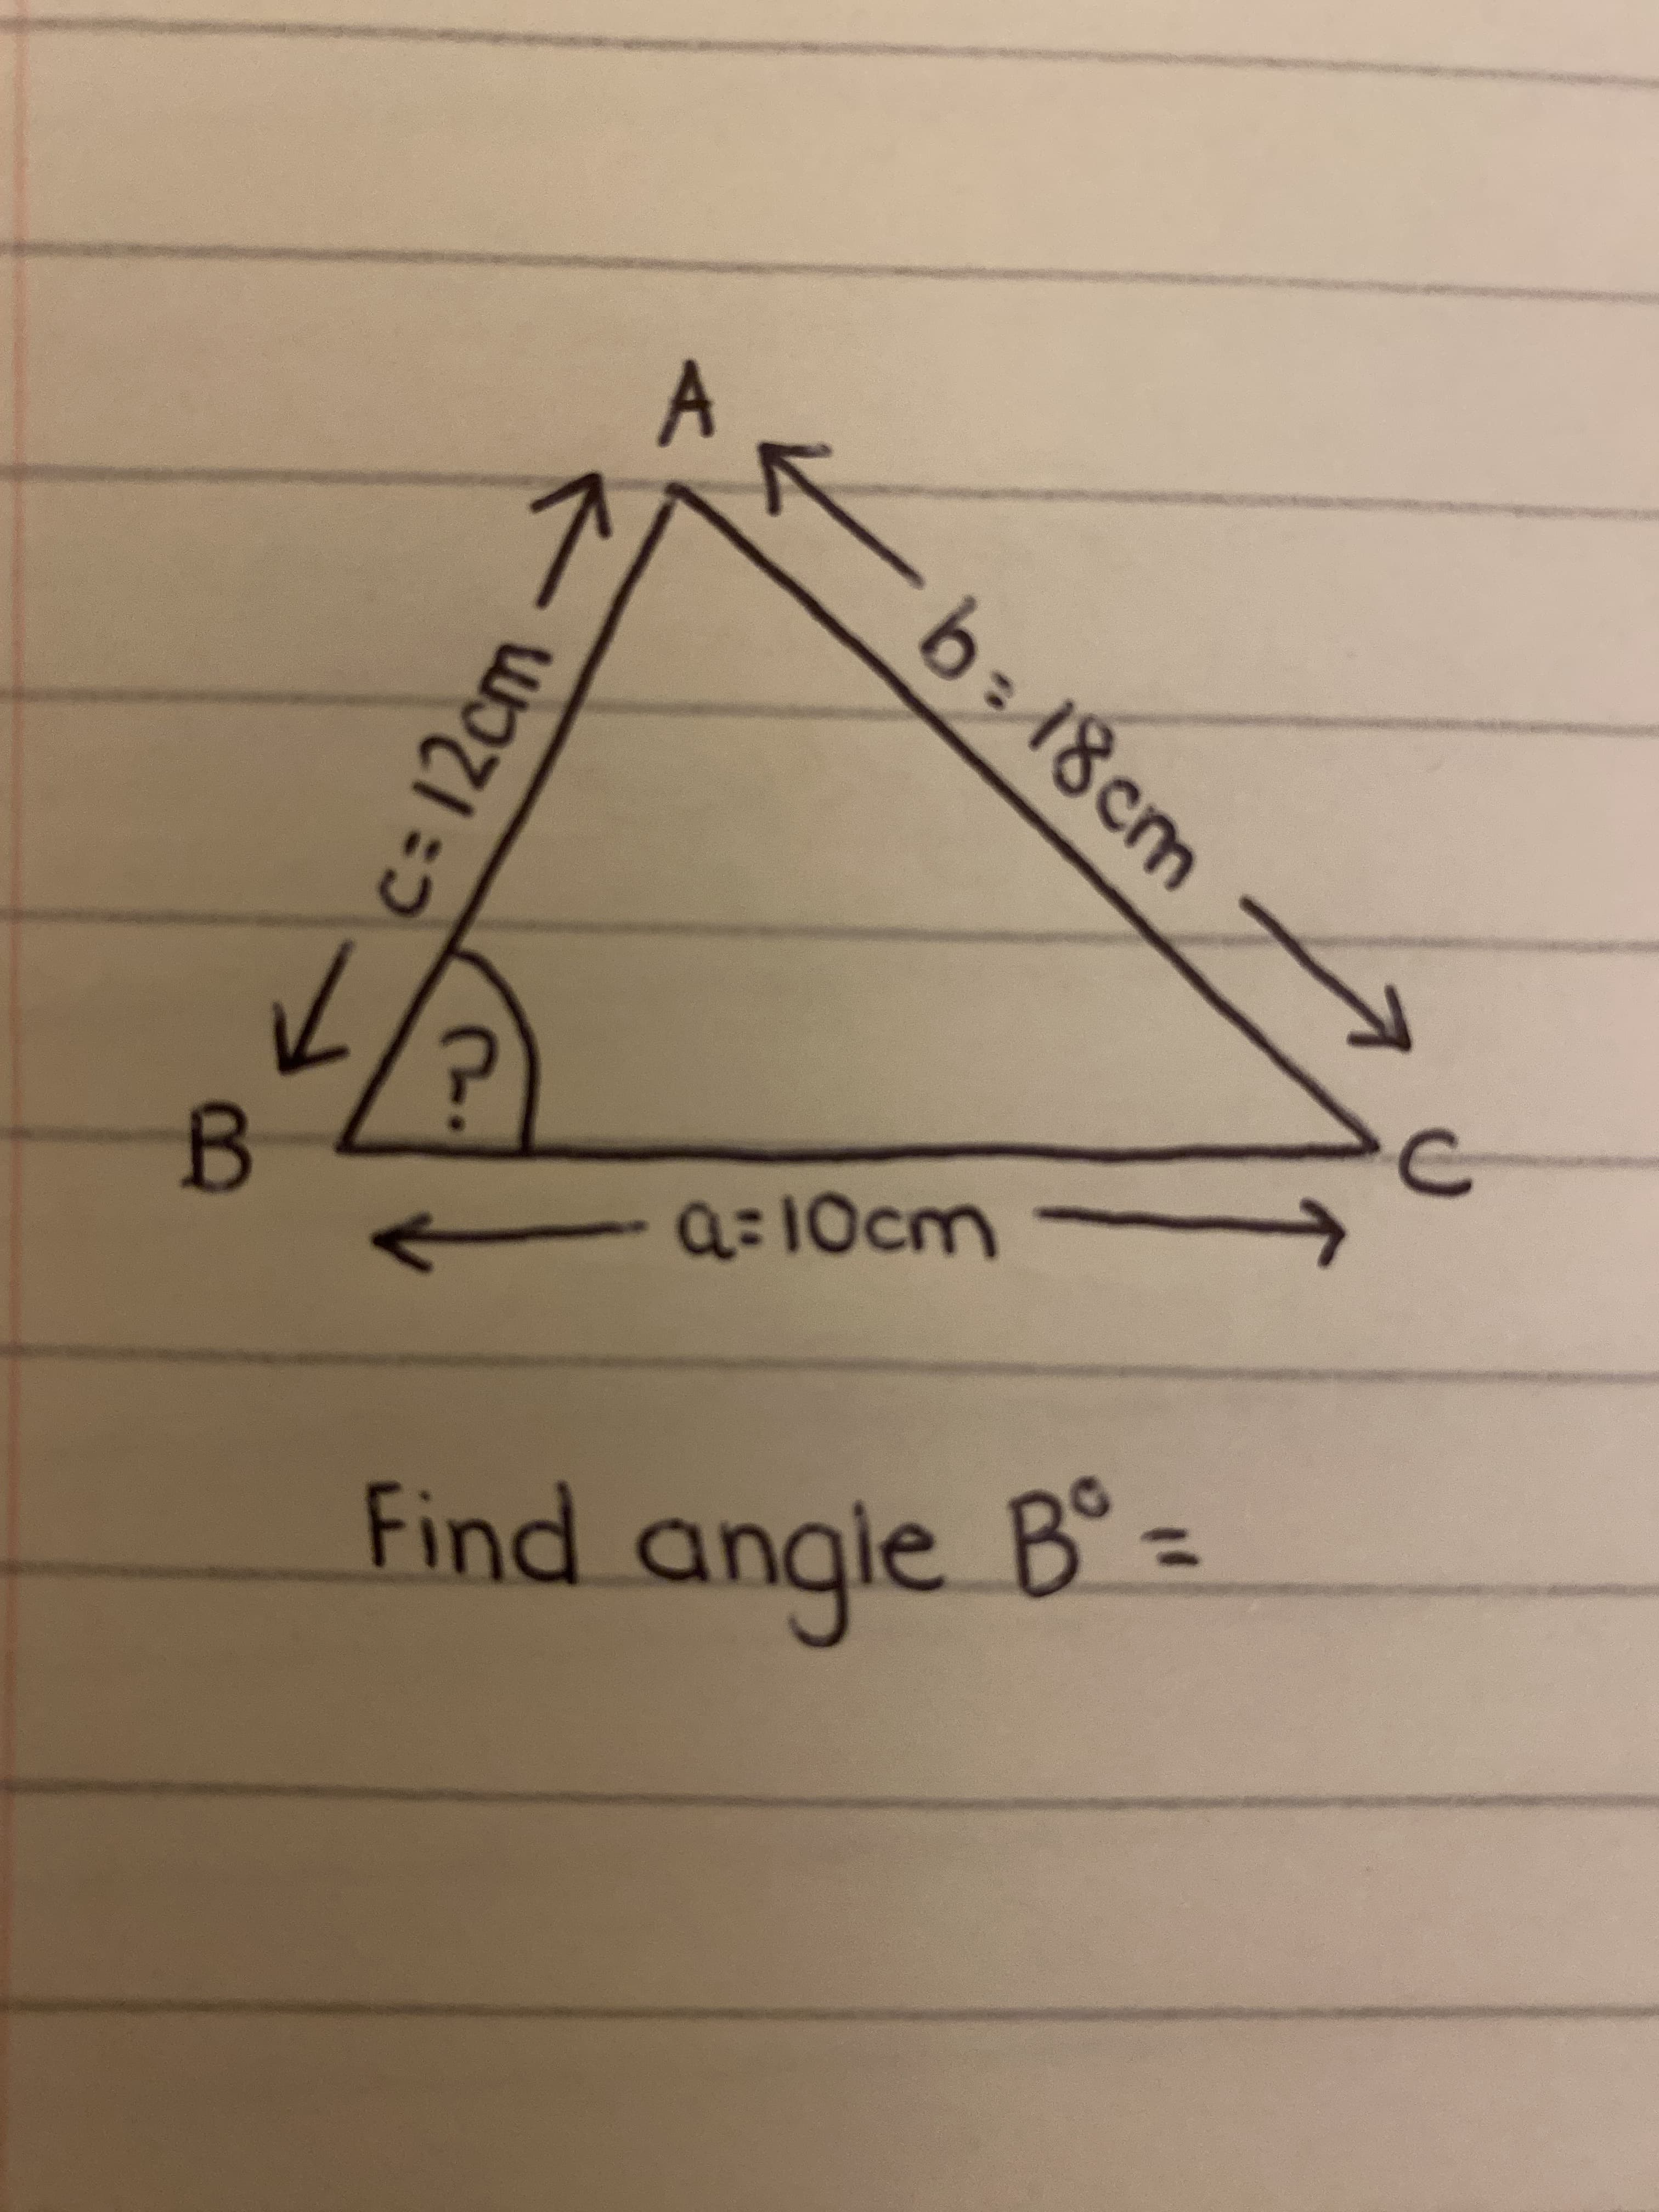 c: 12cm->
A.
b:18cm
a=10cm
angle
Find ar
bup
B.
